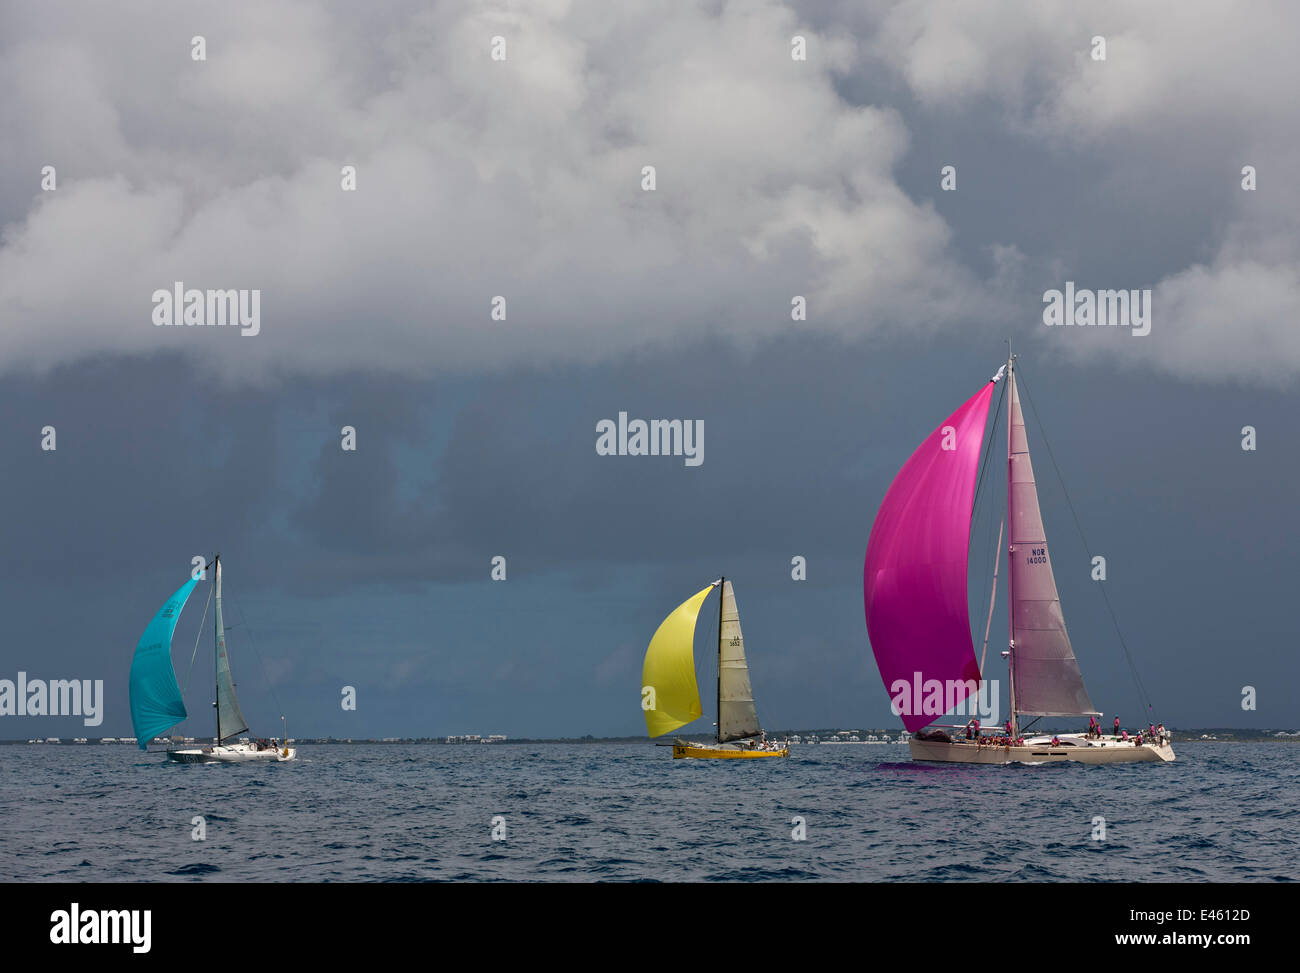 Yachts racing sotto spinnaker colorati e cieli bui durante la regata Heineken, St Martin, Caraibi, marzo 2011. Foto Stock